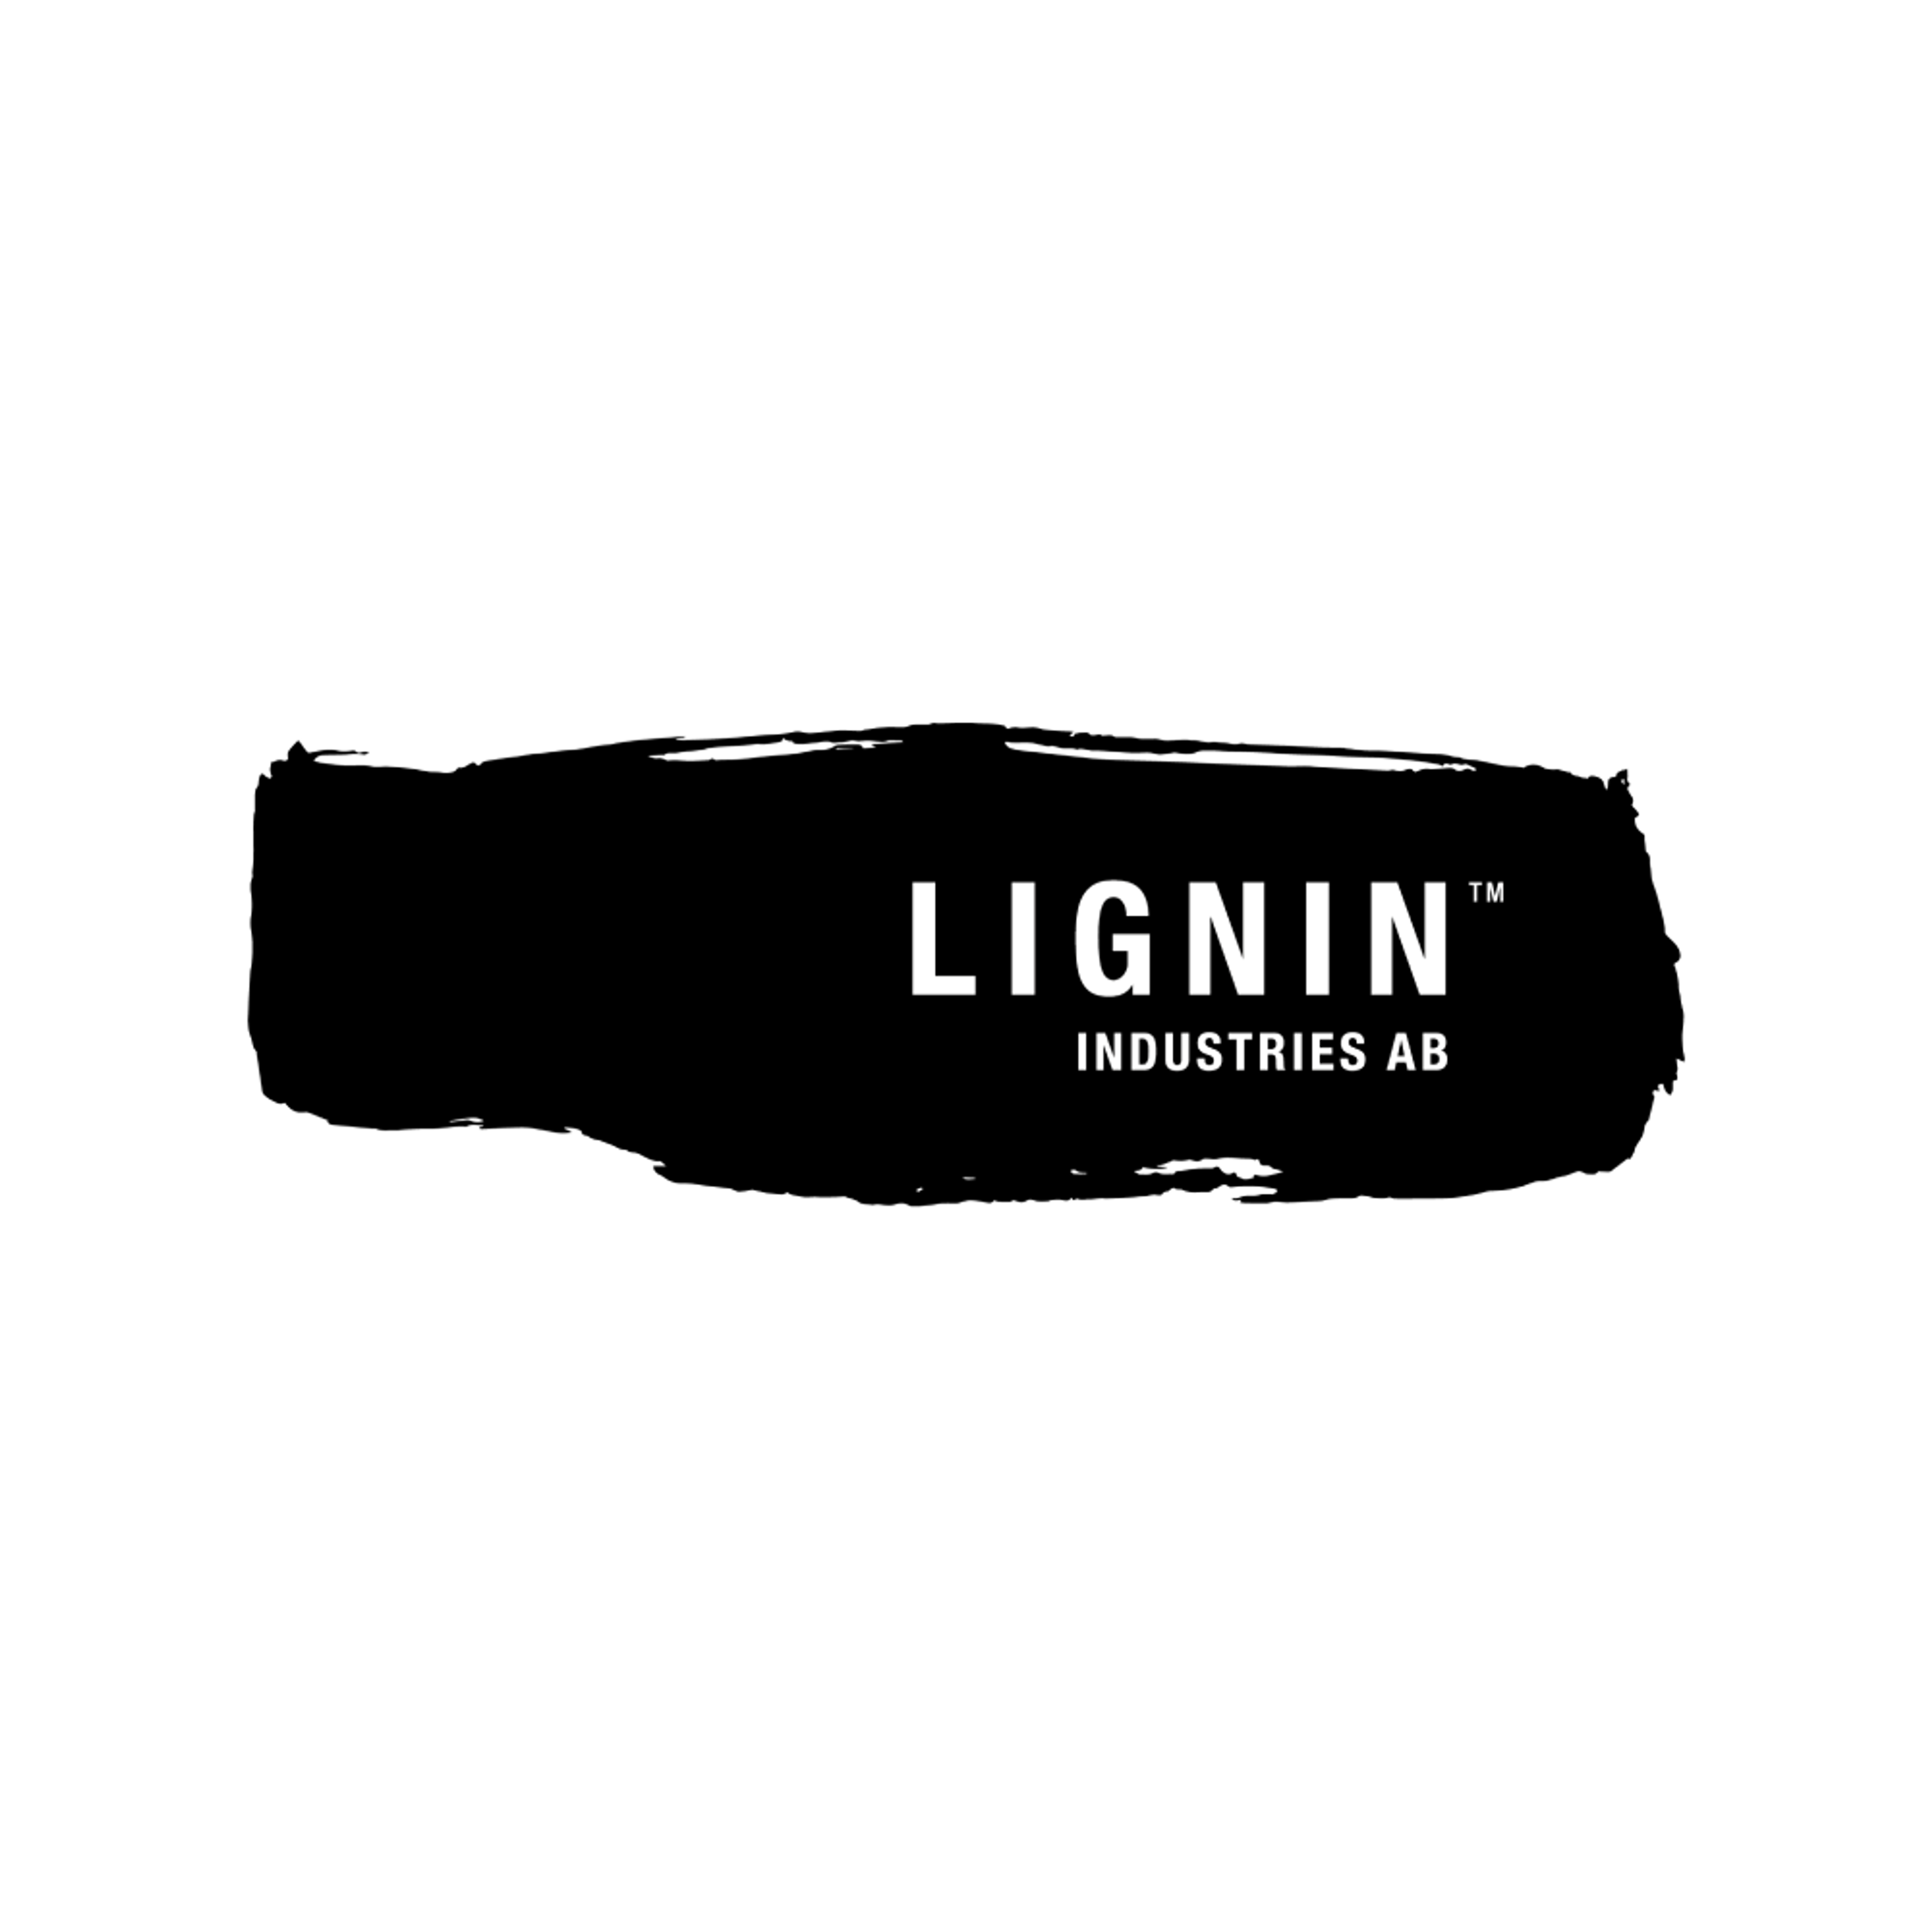 Lignin Industries